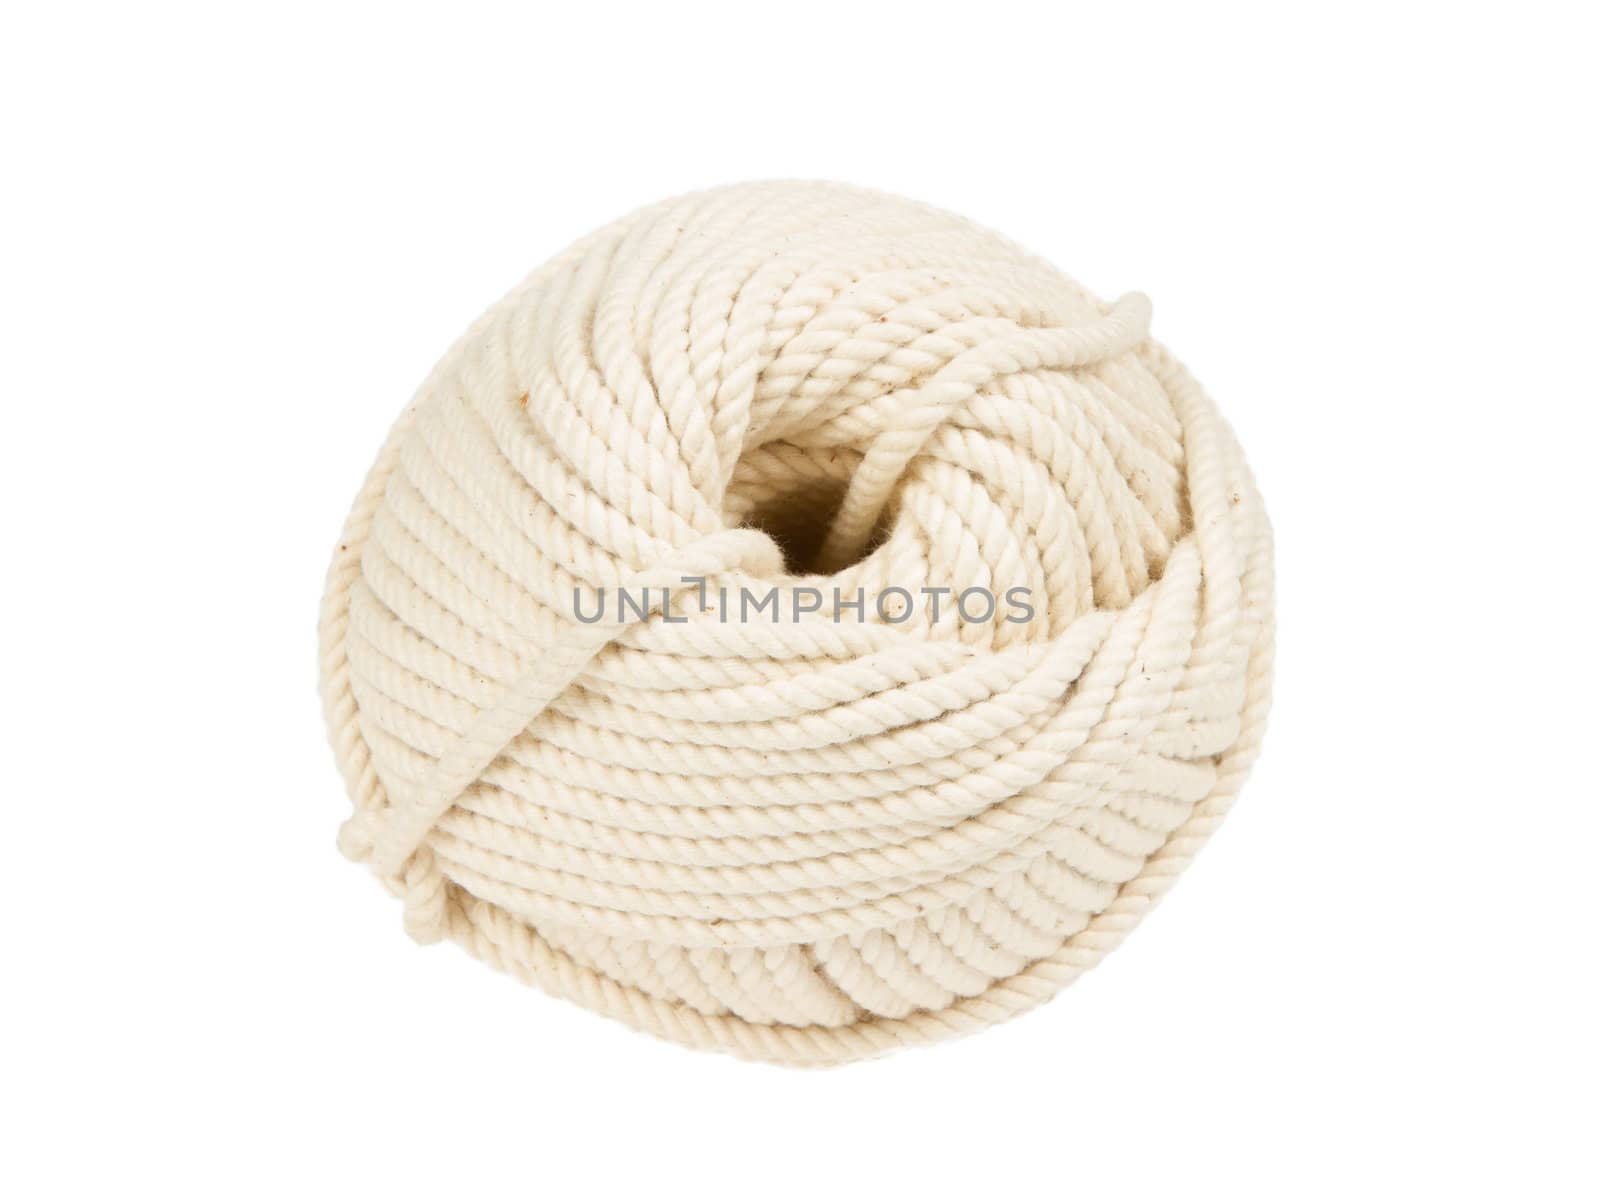 White knitting yarn isolated on a white background